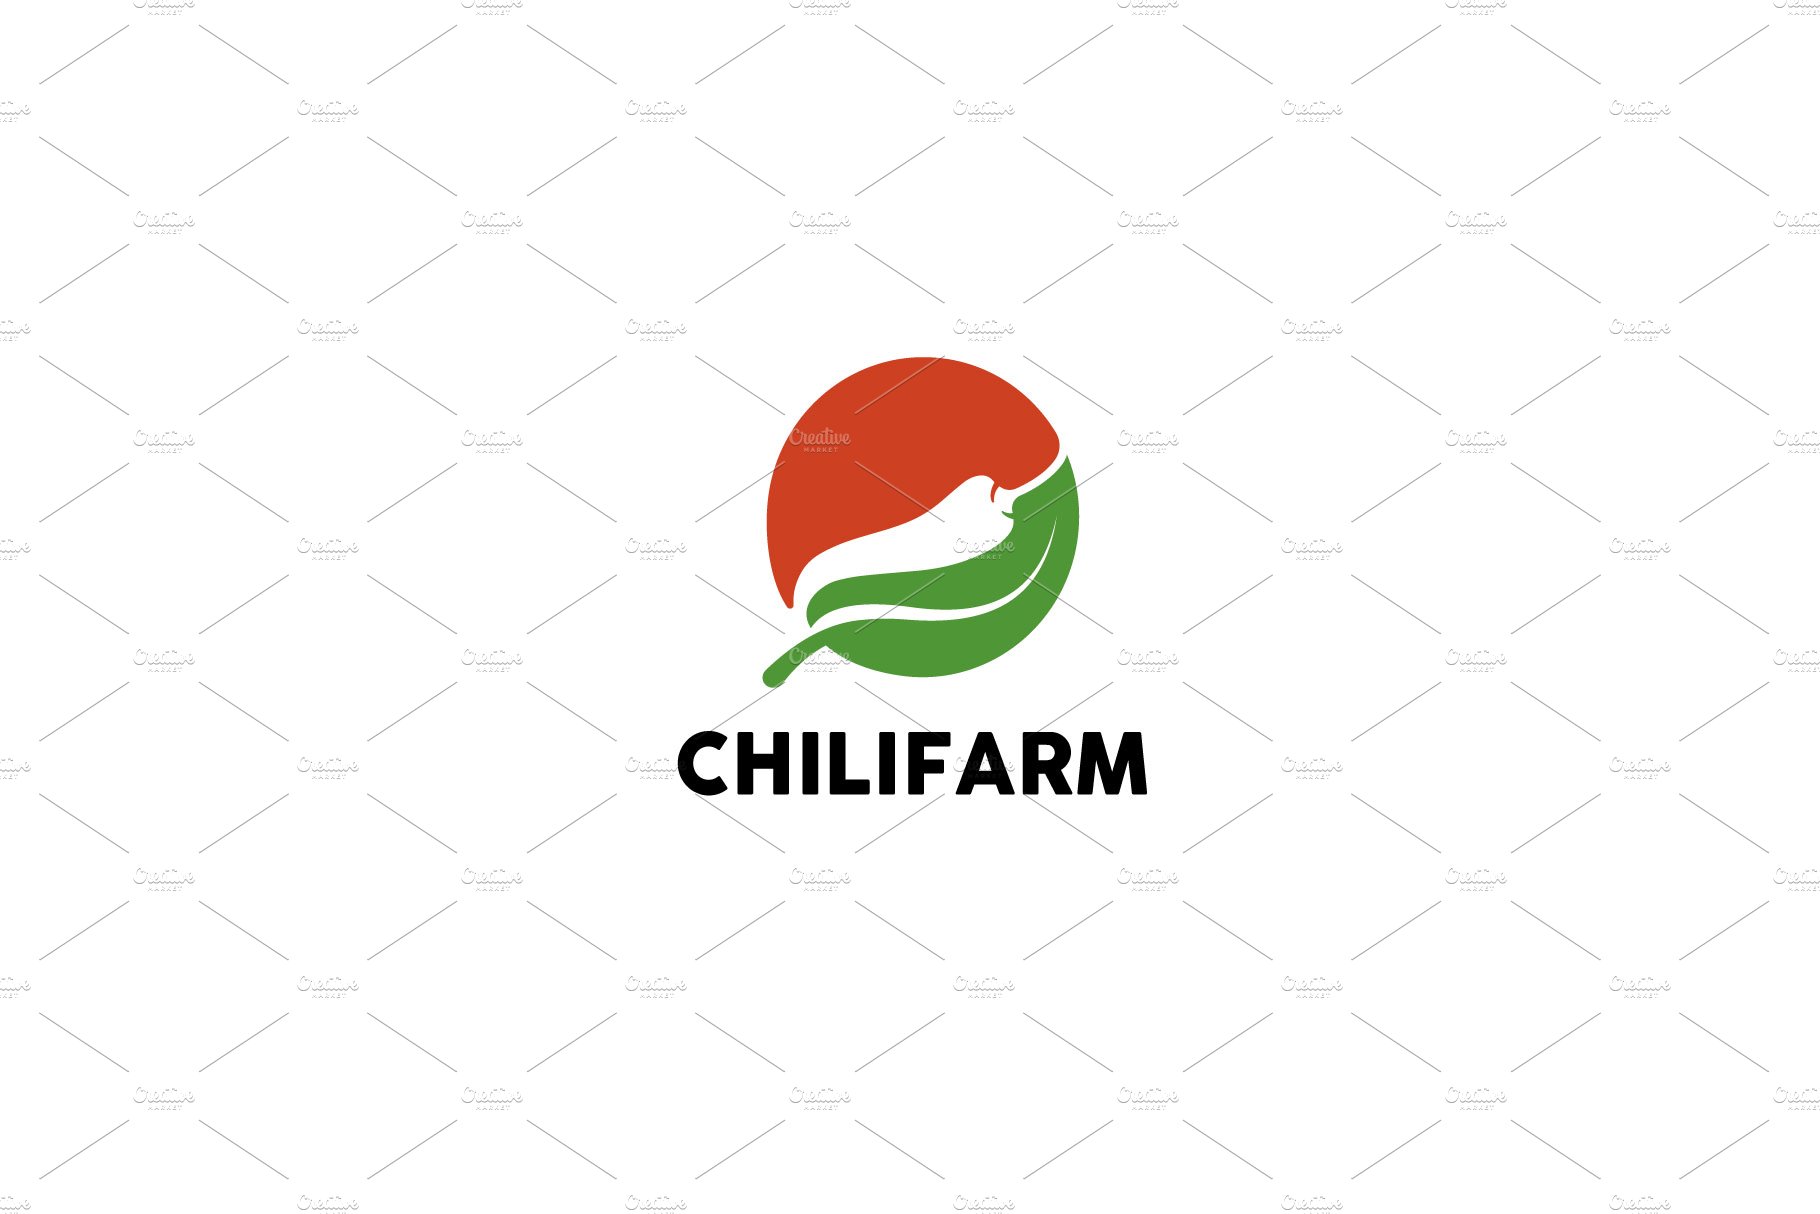 chili farm logo preview image.